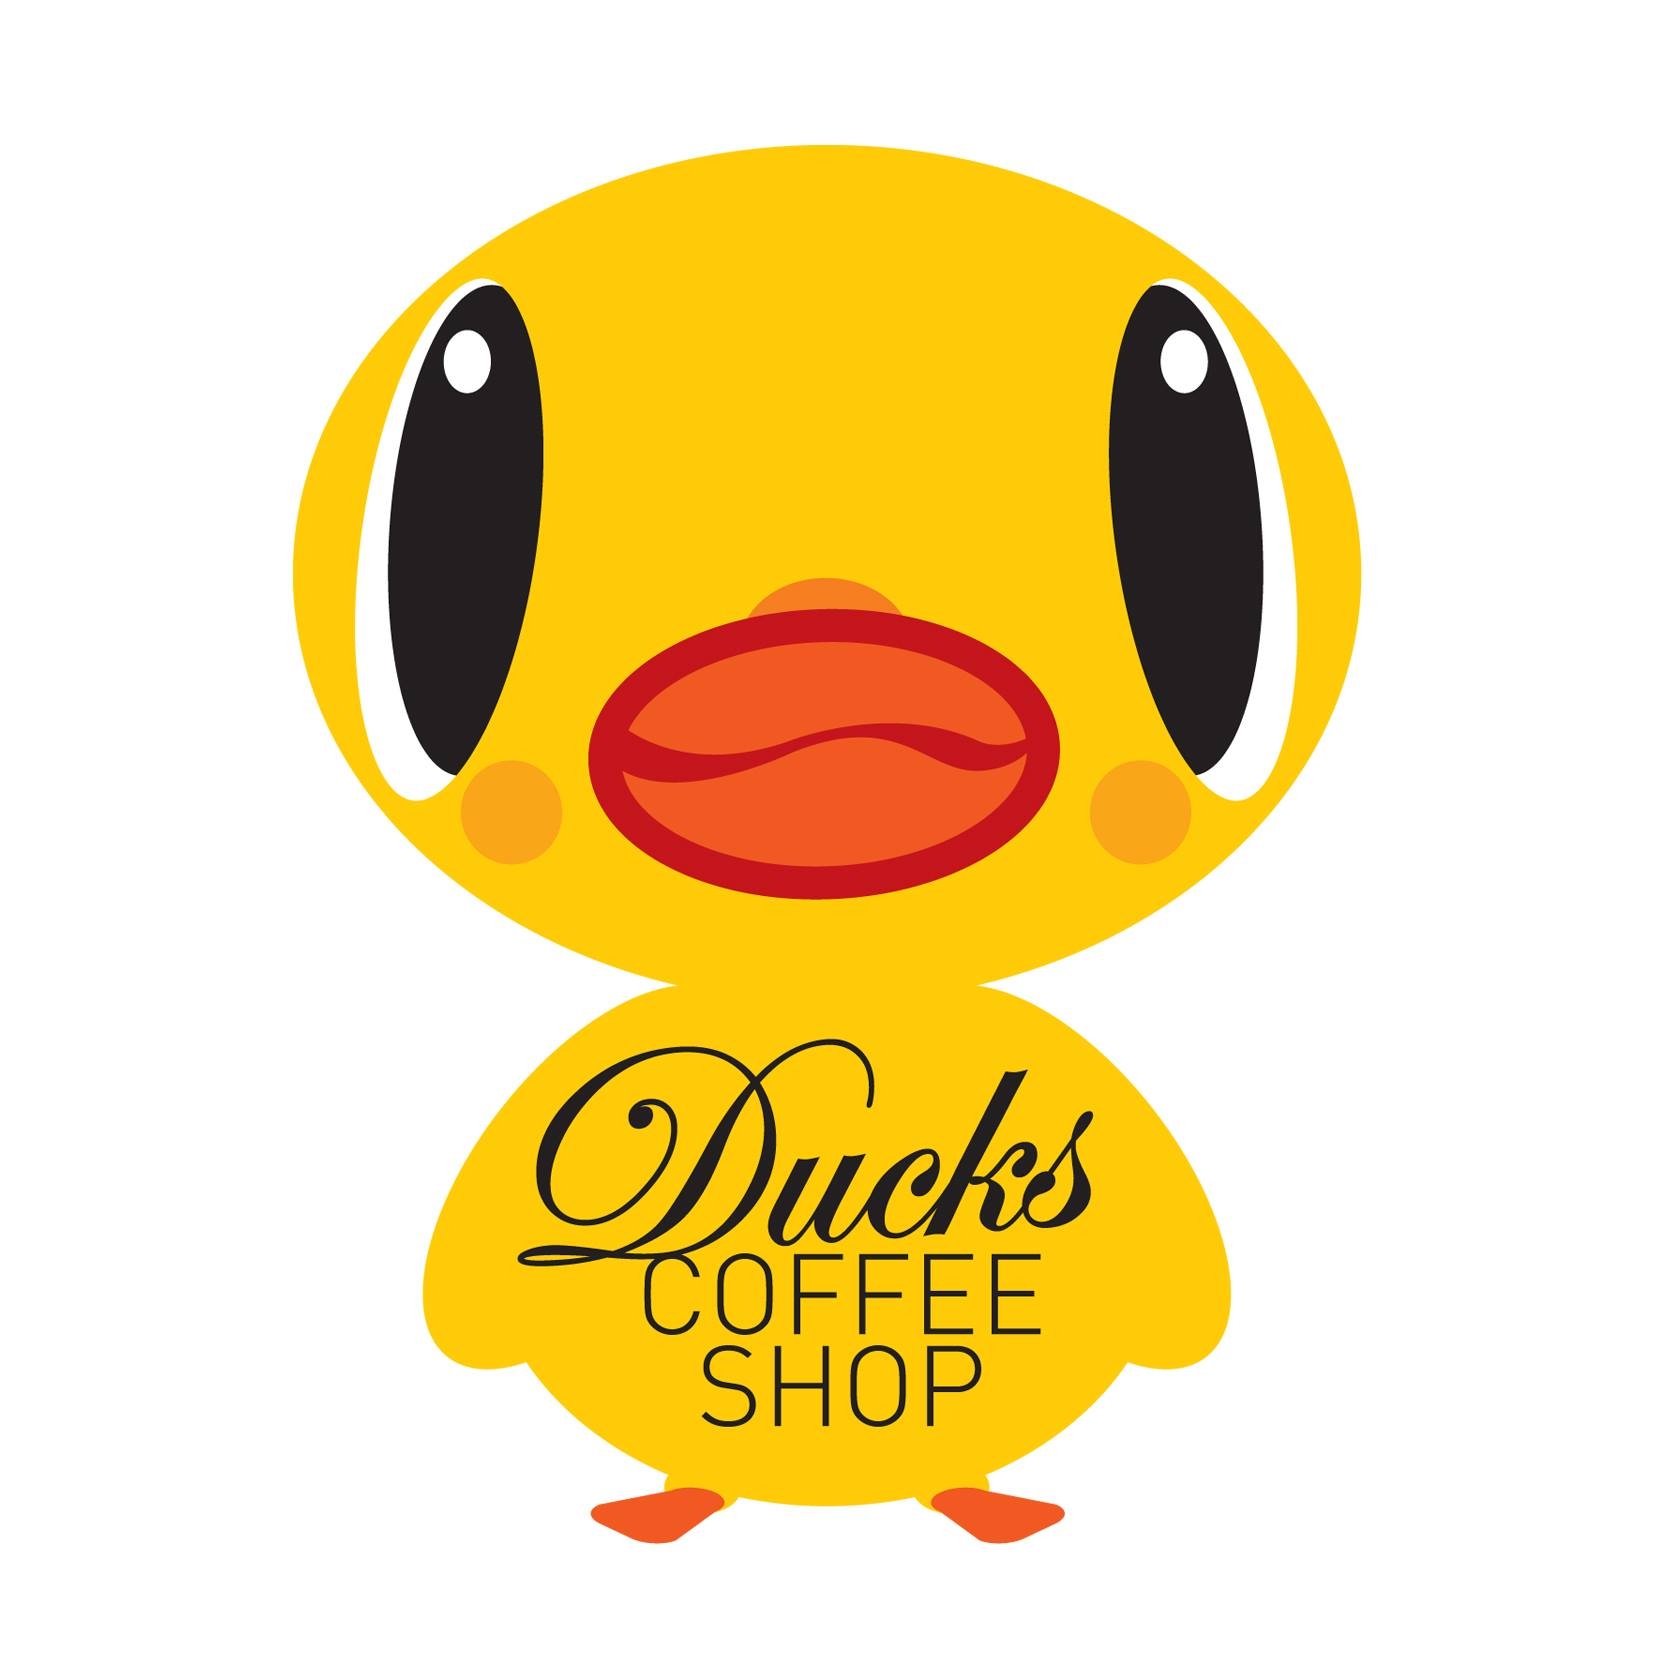 www.duckscoffeeshop.at